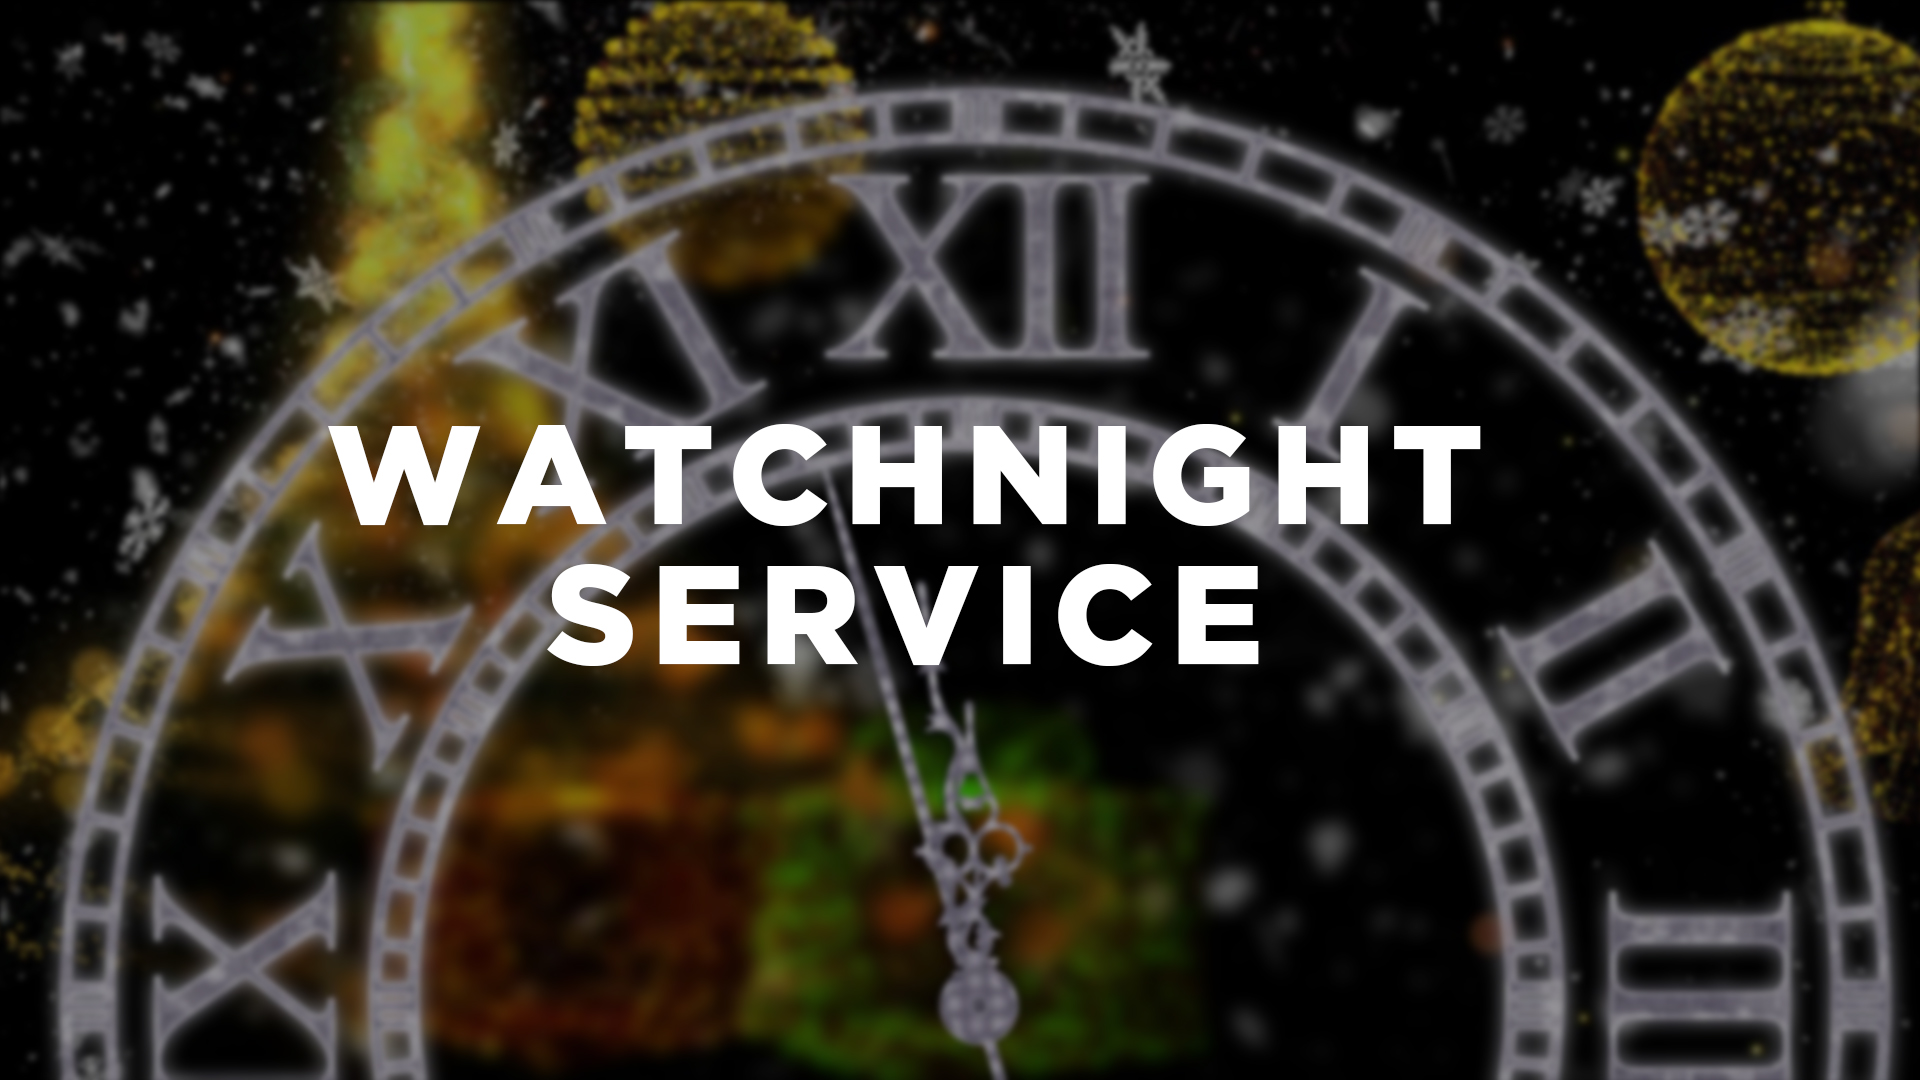 2021 Watchnight Service